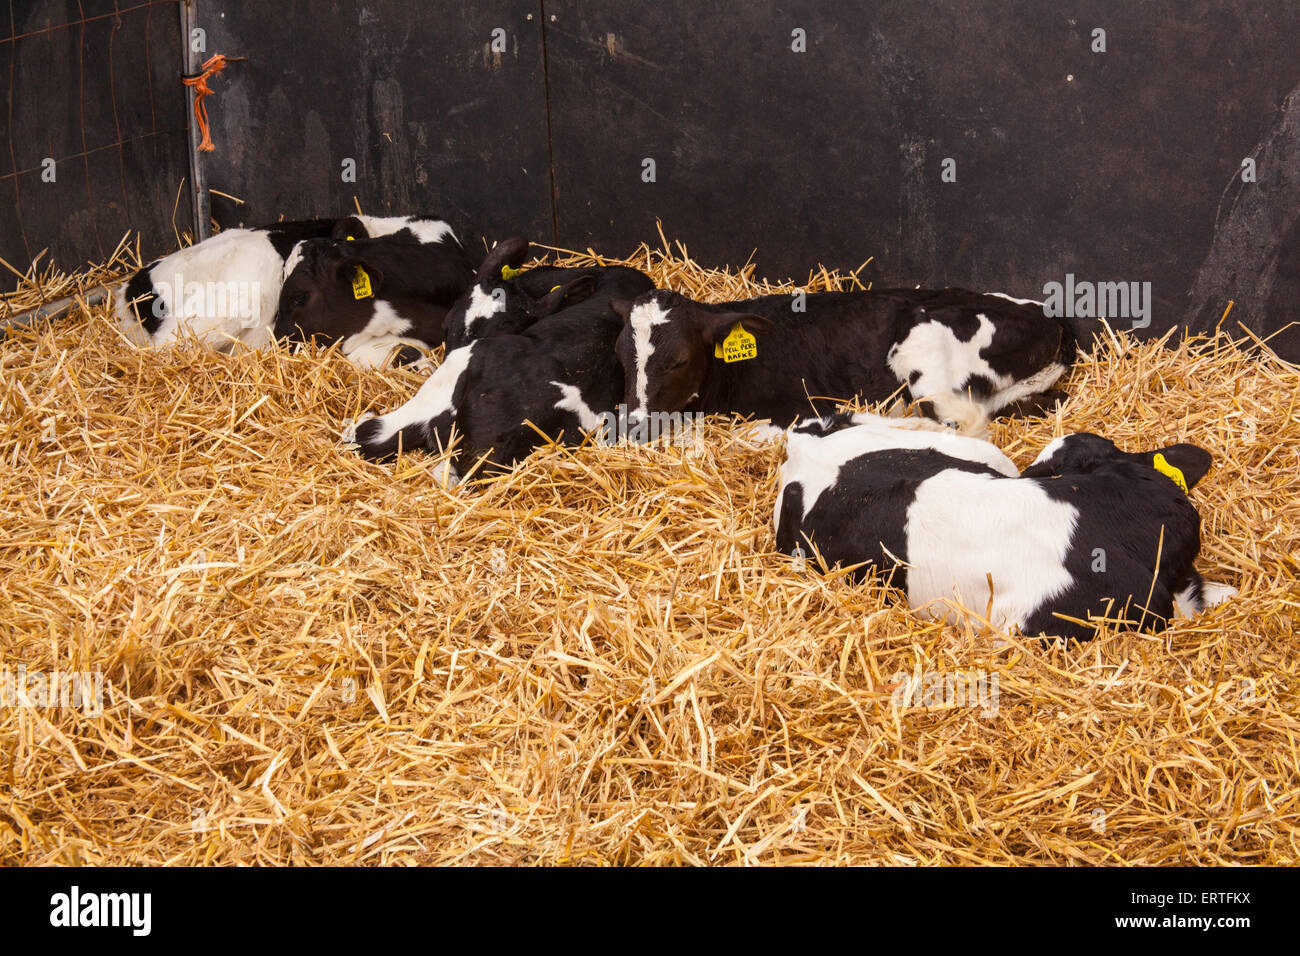 Eight week old dairy calves at Cheriton Middle Farm, Cheriton, Hampshire, England, United Kingdom. Stock Photo